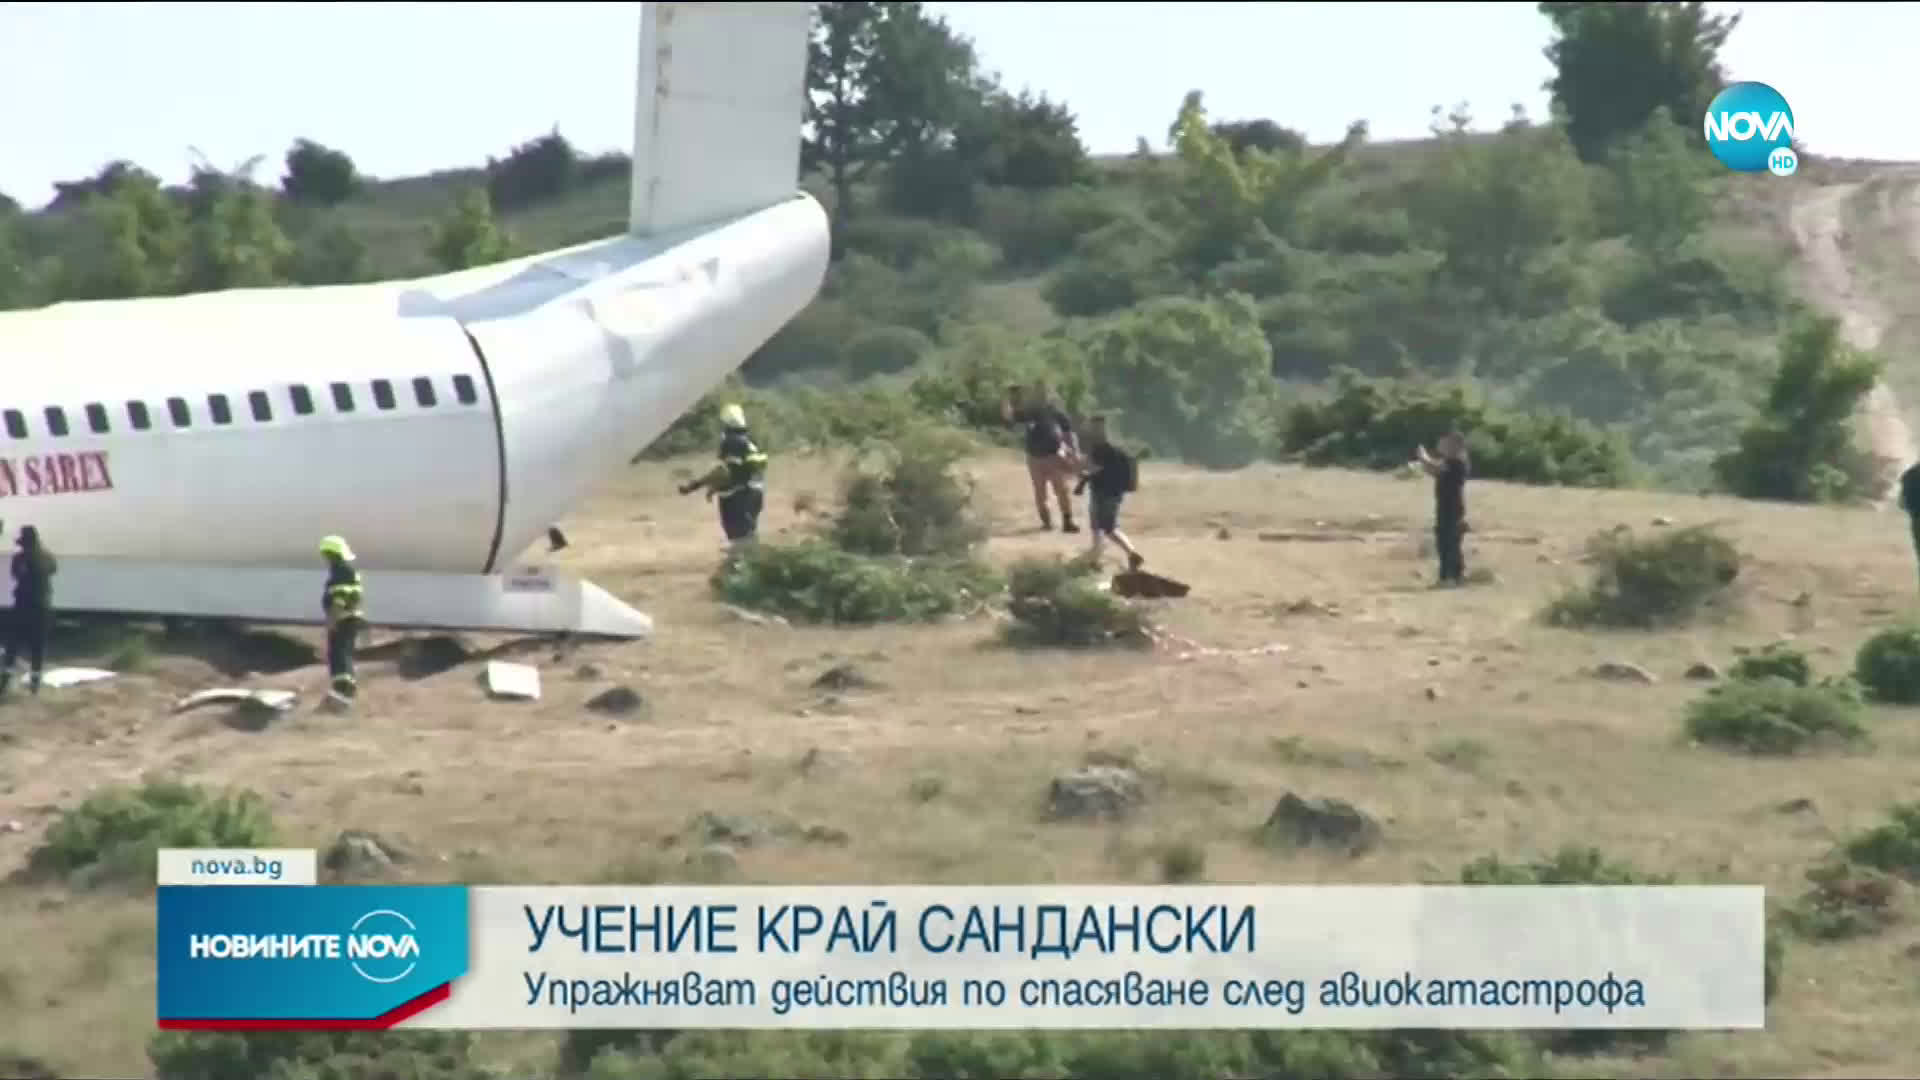 УЧЕНИЕ: Как се спасяват хора от паднал самолет